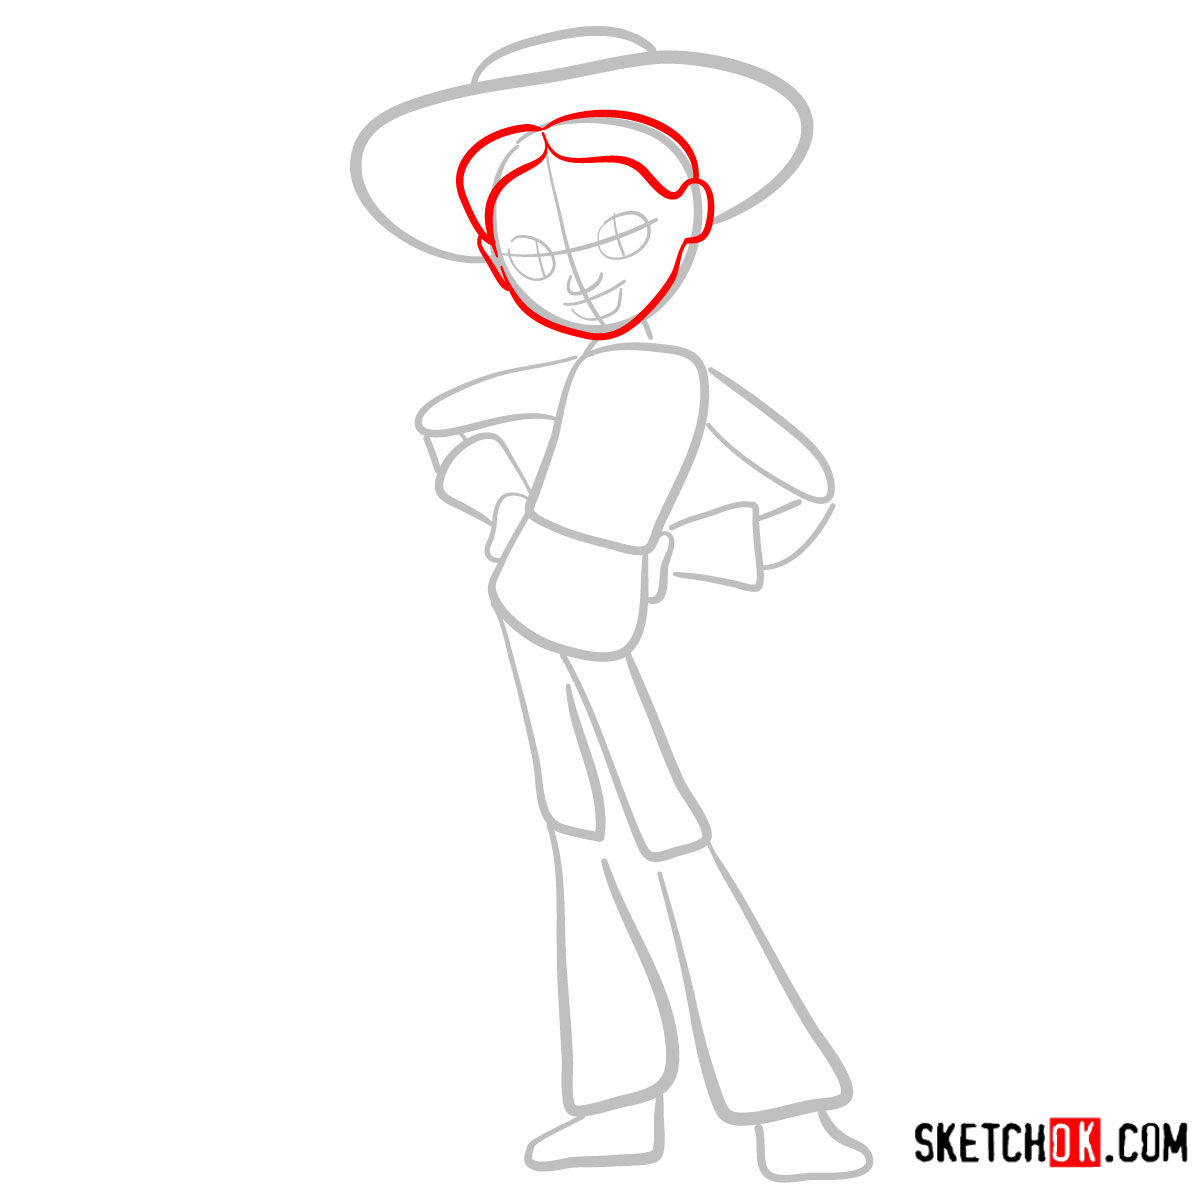 How to draw Jessie from Toy Story 2 - step 03